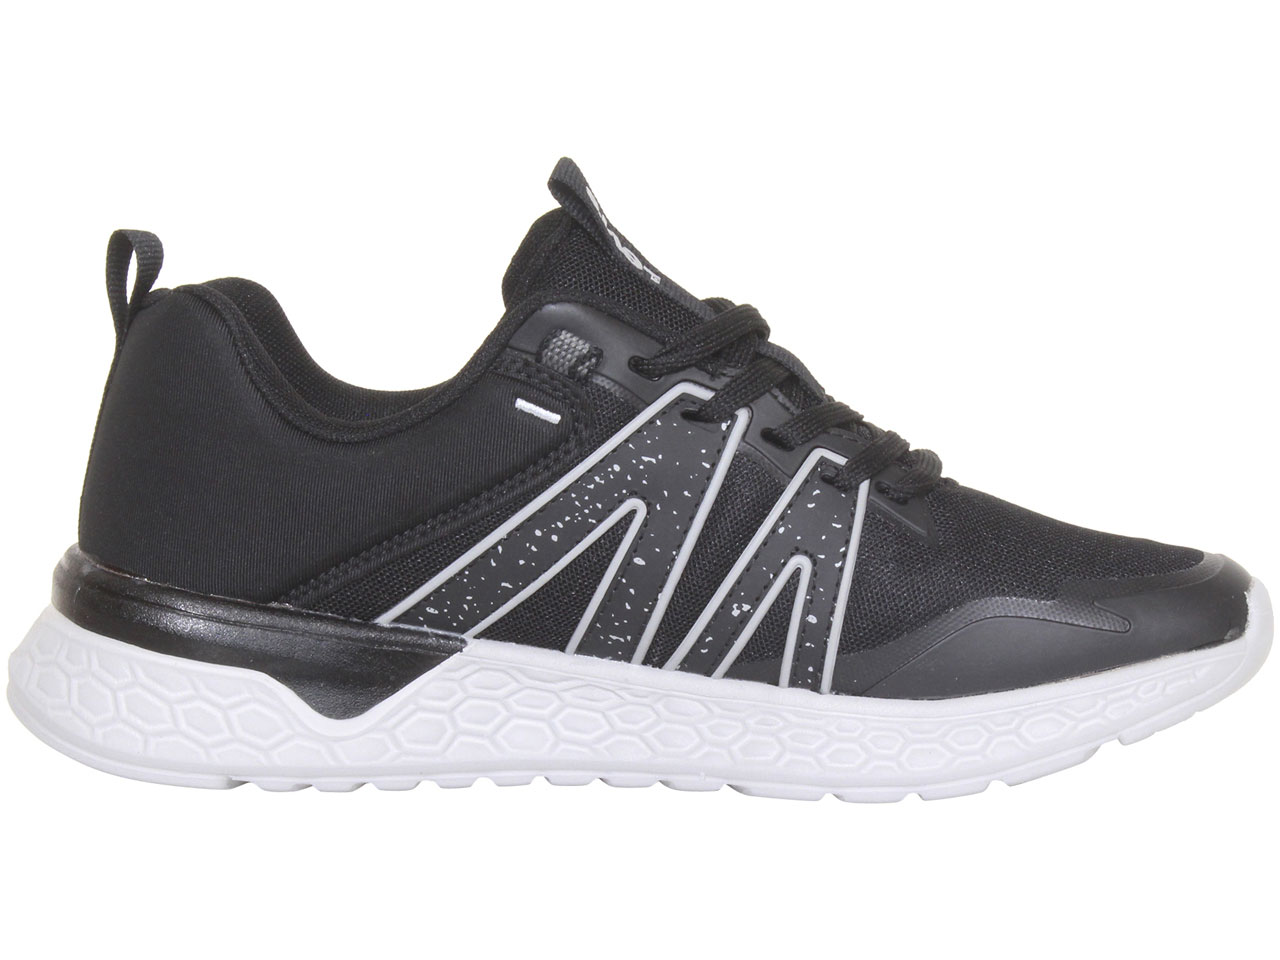 Levis Men's Newbury-Trail Sneakers Low-Top Running Shoes Black/Silver Sz:  12 